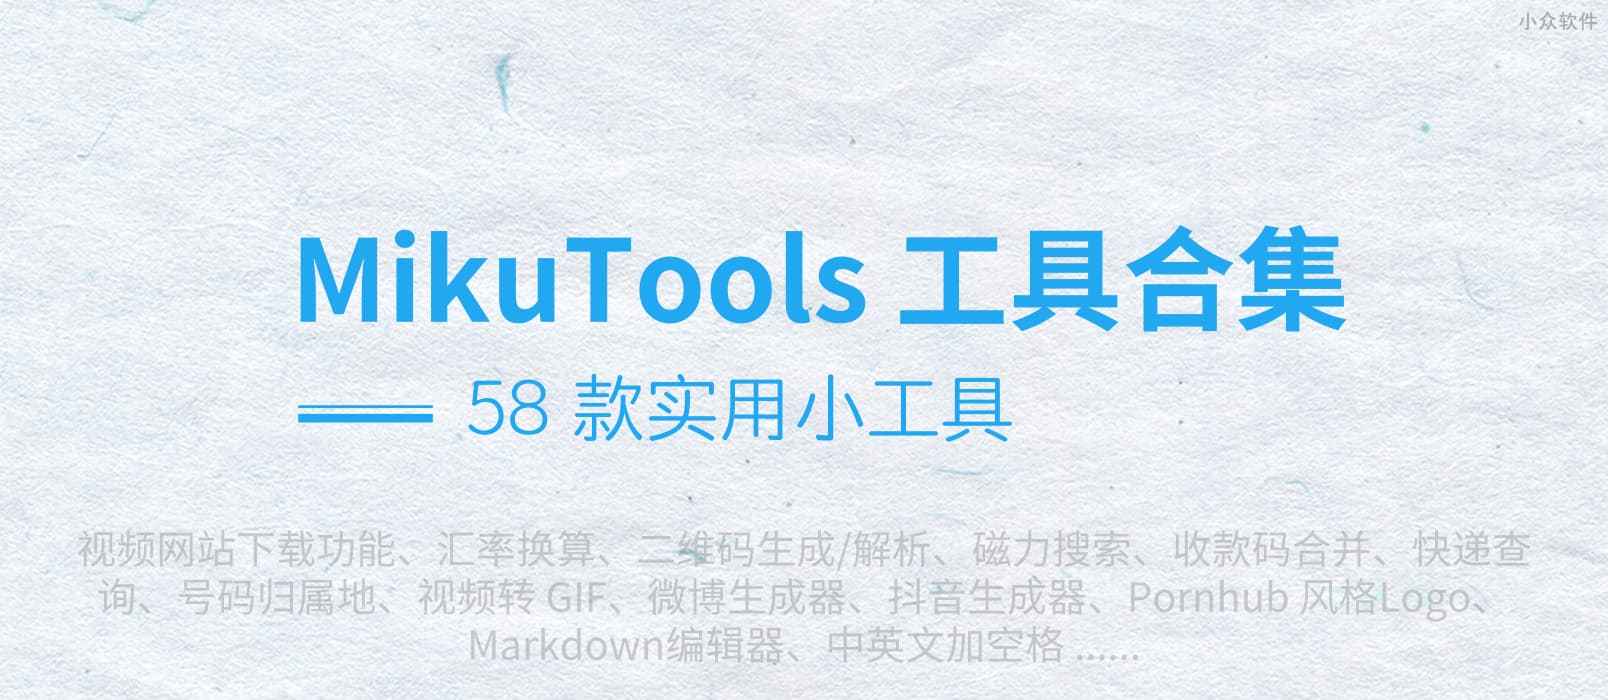 MikuTools - 58 款小工具合集：视频下载、磁力搜索、实用工具、文字处理等 1